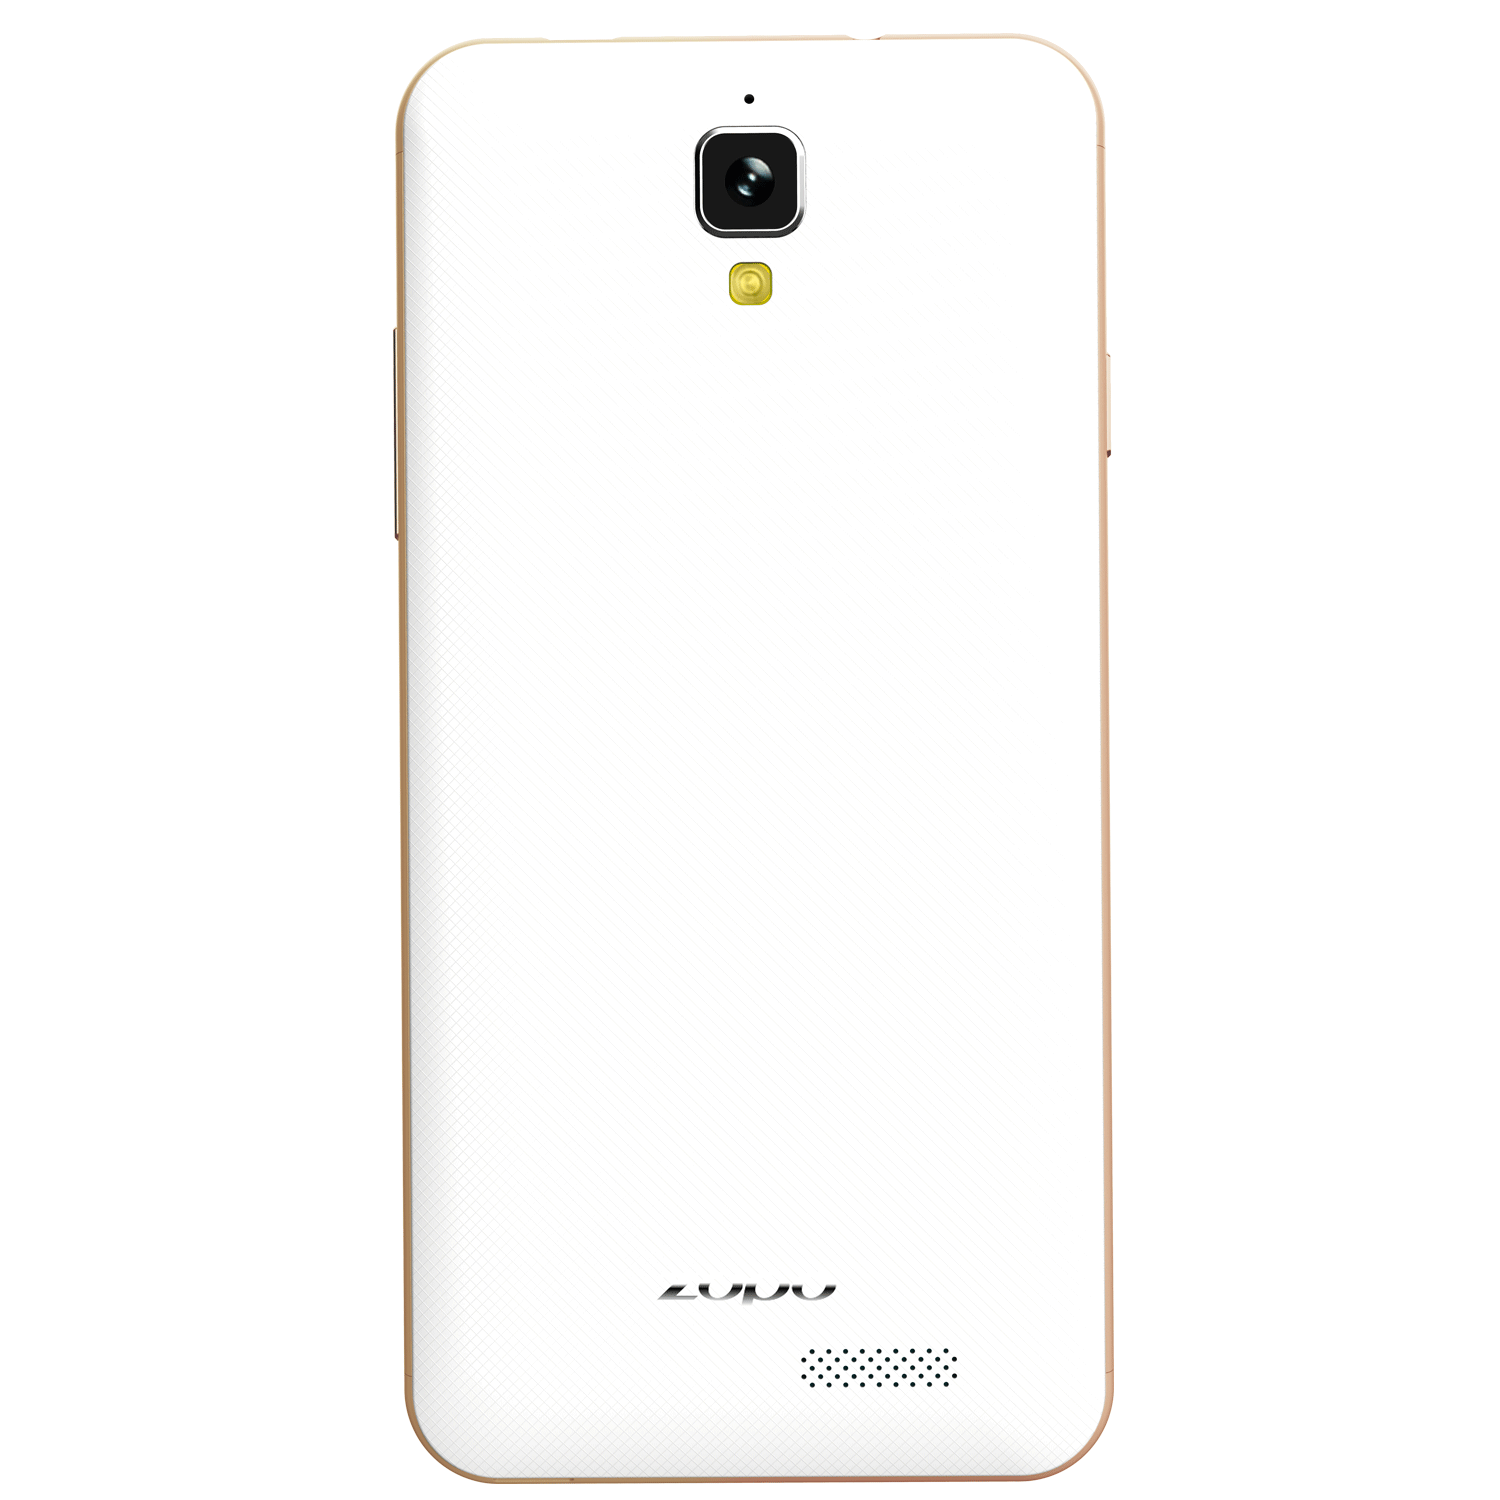 ZOPO ZP530 Smartphone 4G 64bit Quad Core 1.5GHz 5.0 Inch HD Screen Android 4.4- White